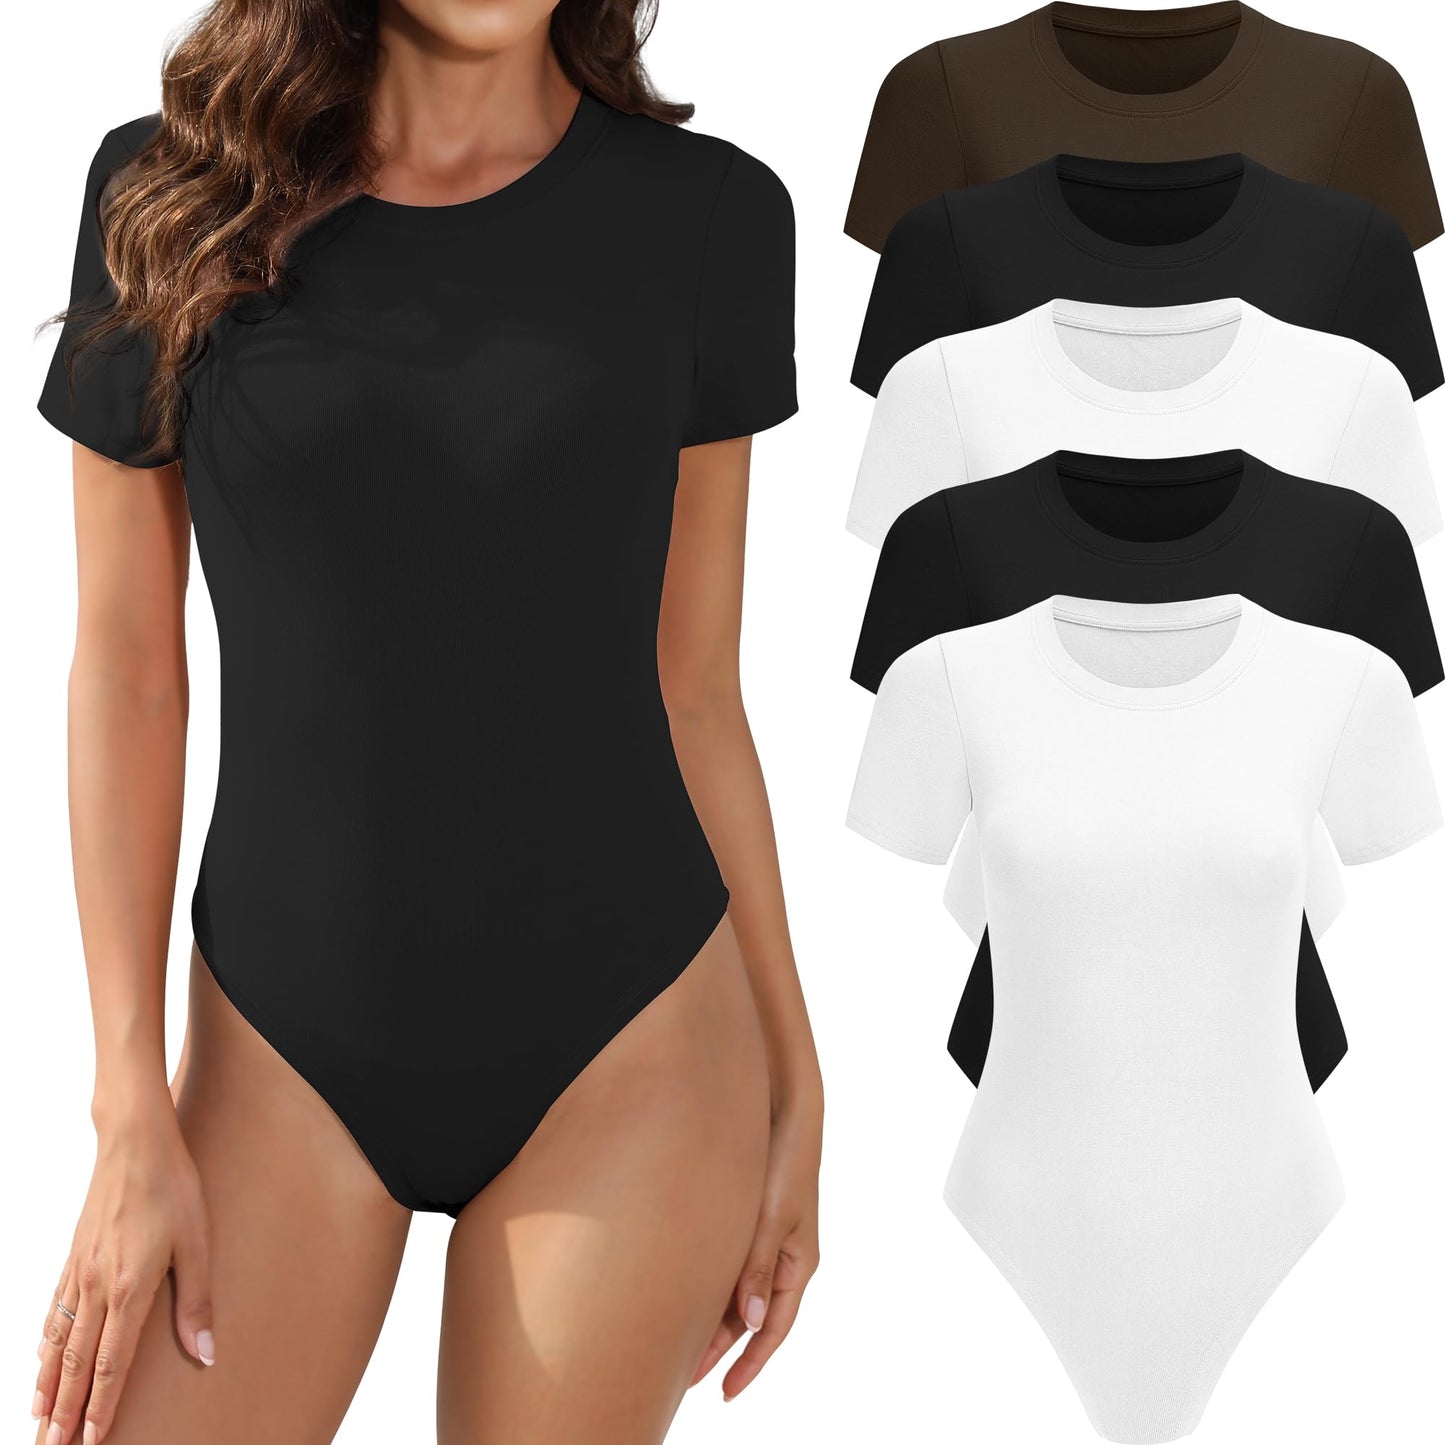 MLYENX 5 Pack Short Sleeve Bodysuit For Women Round Neck Casual Stretchy Basic T Shirt Bodysuit Tops